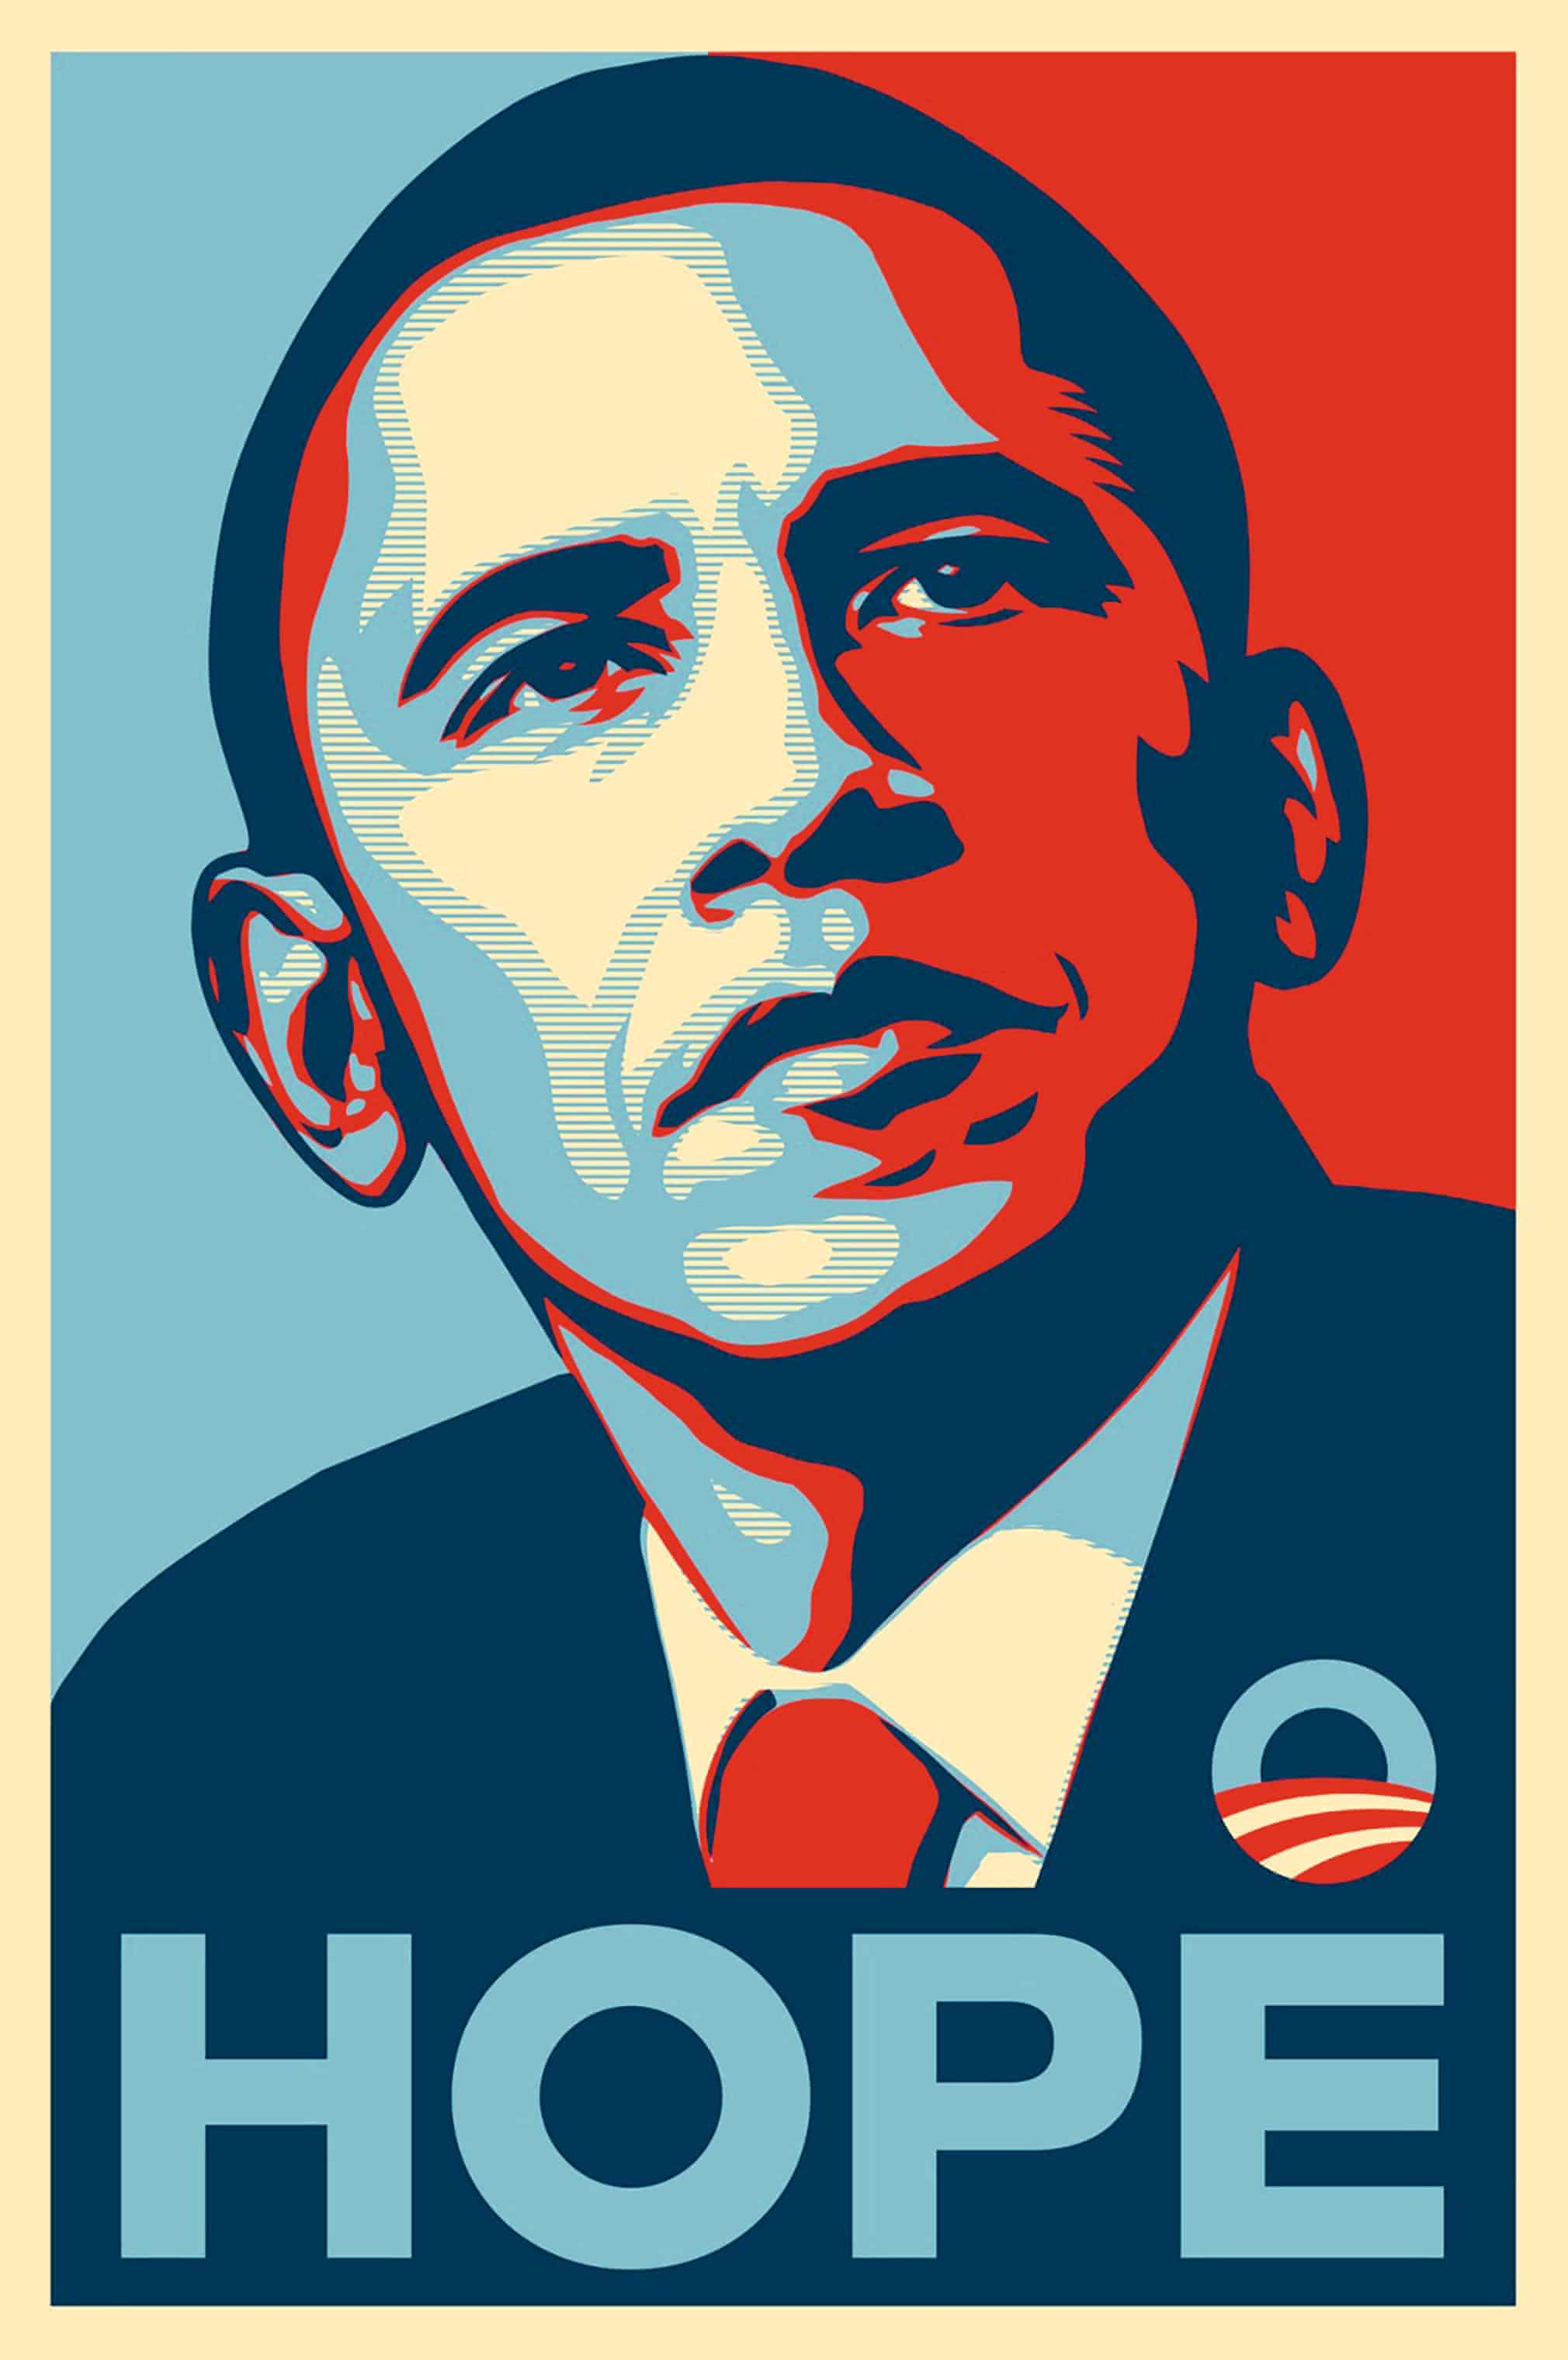 Shepard Fairey's Barack Obama HOPE poster